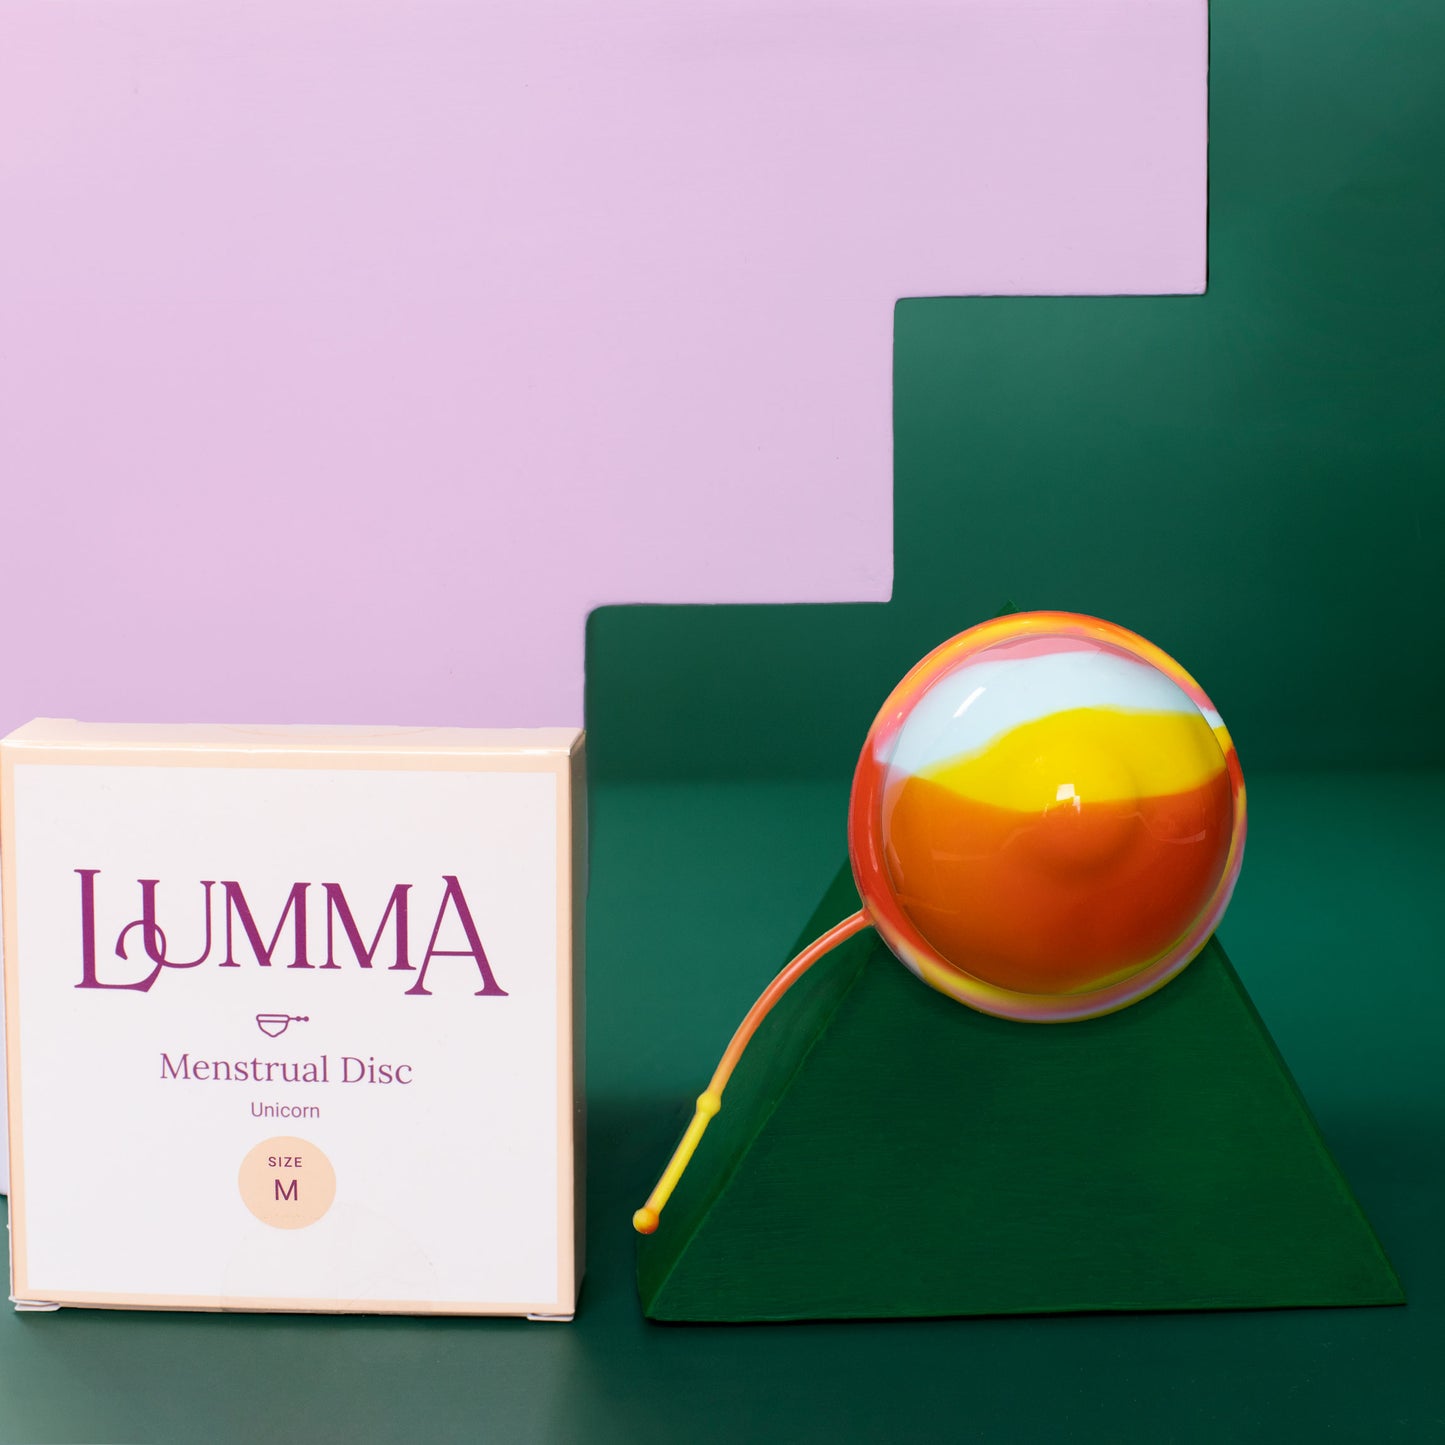 Lumma menstrual disc size Medium in unicorn with packaging